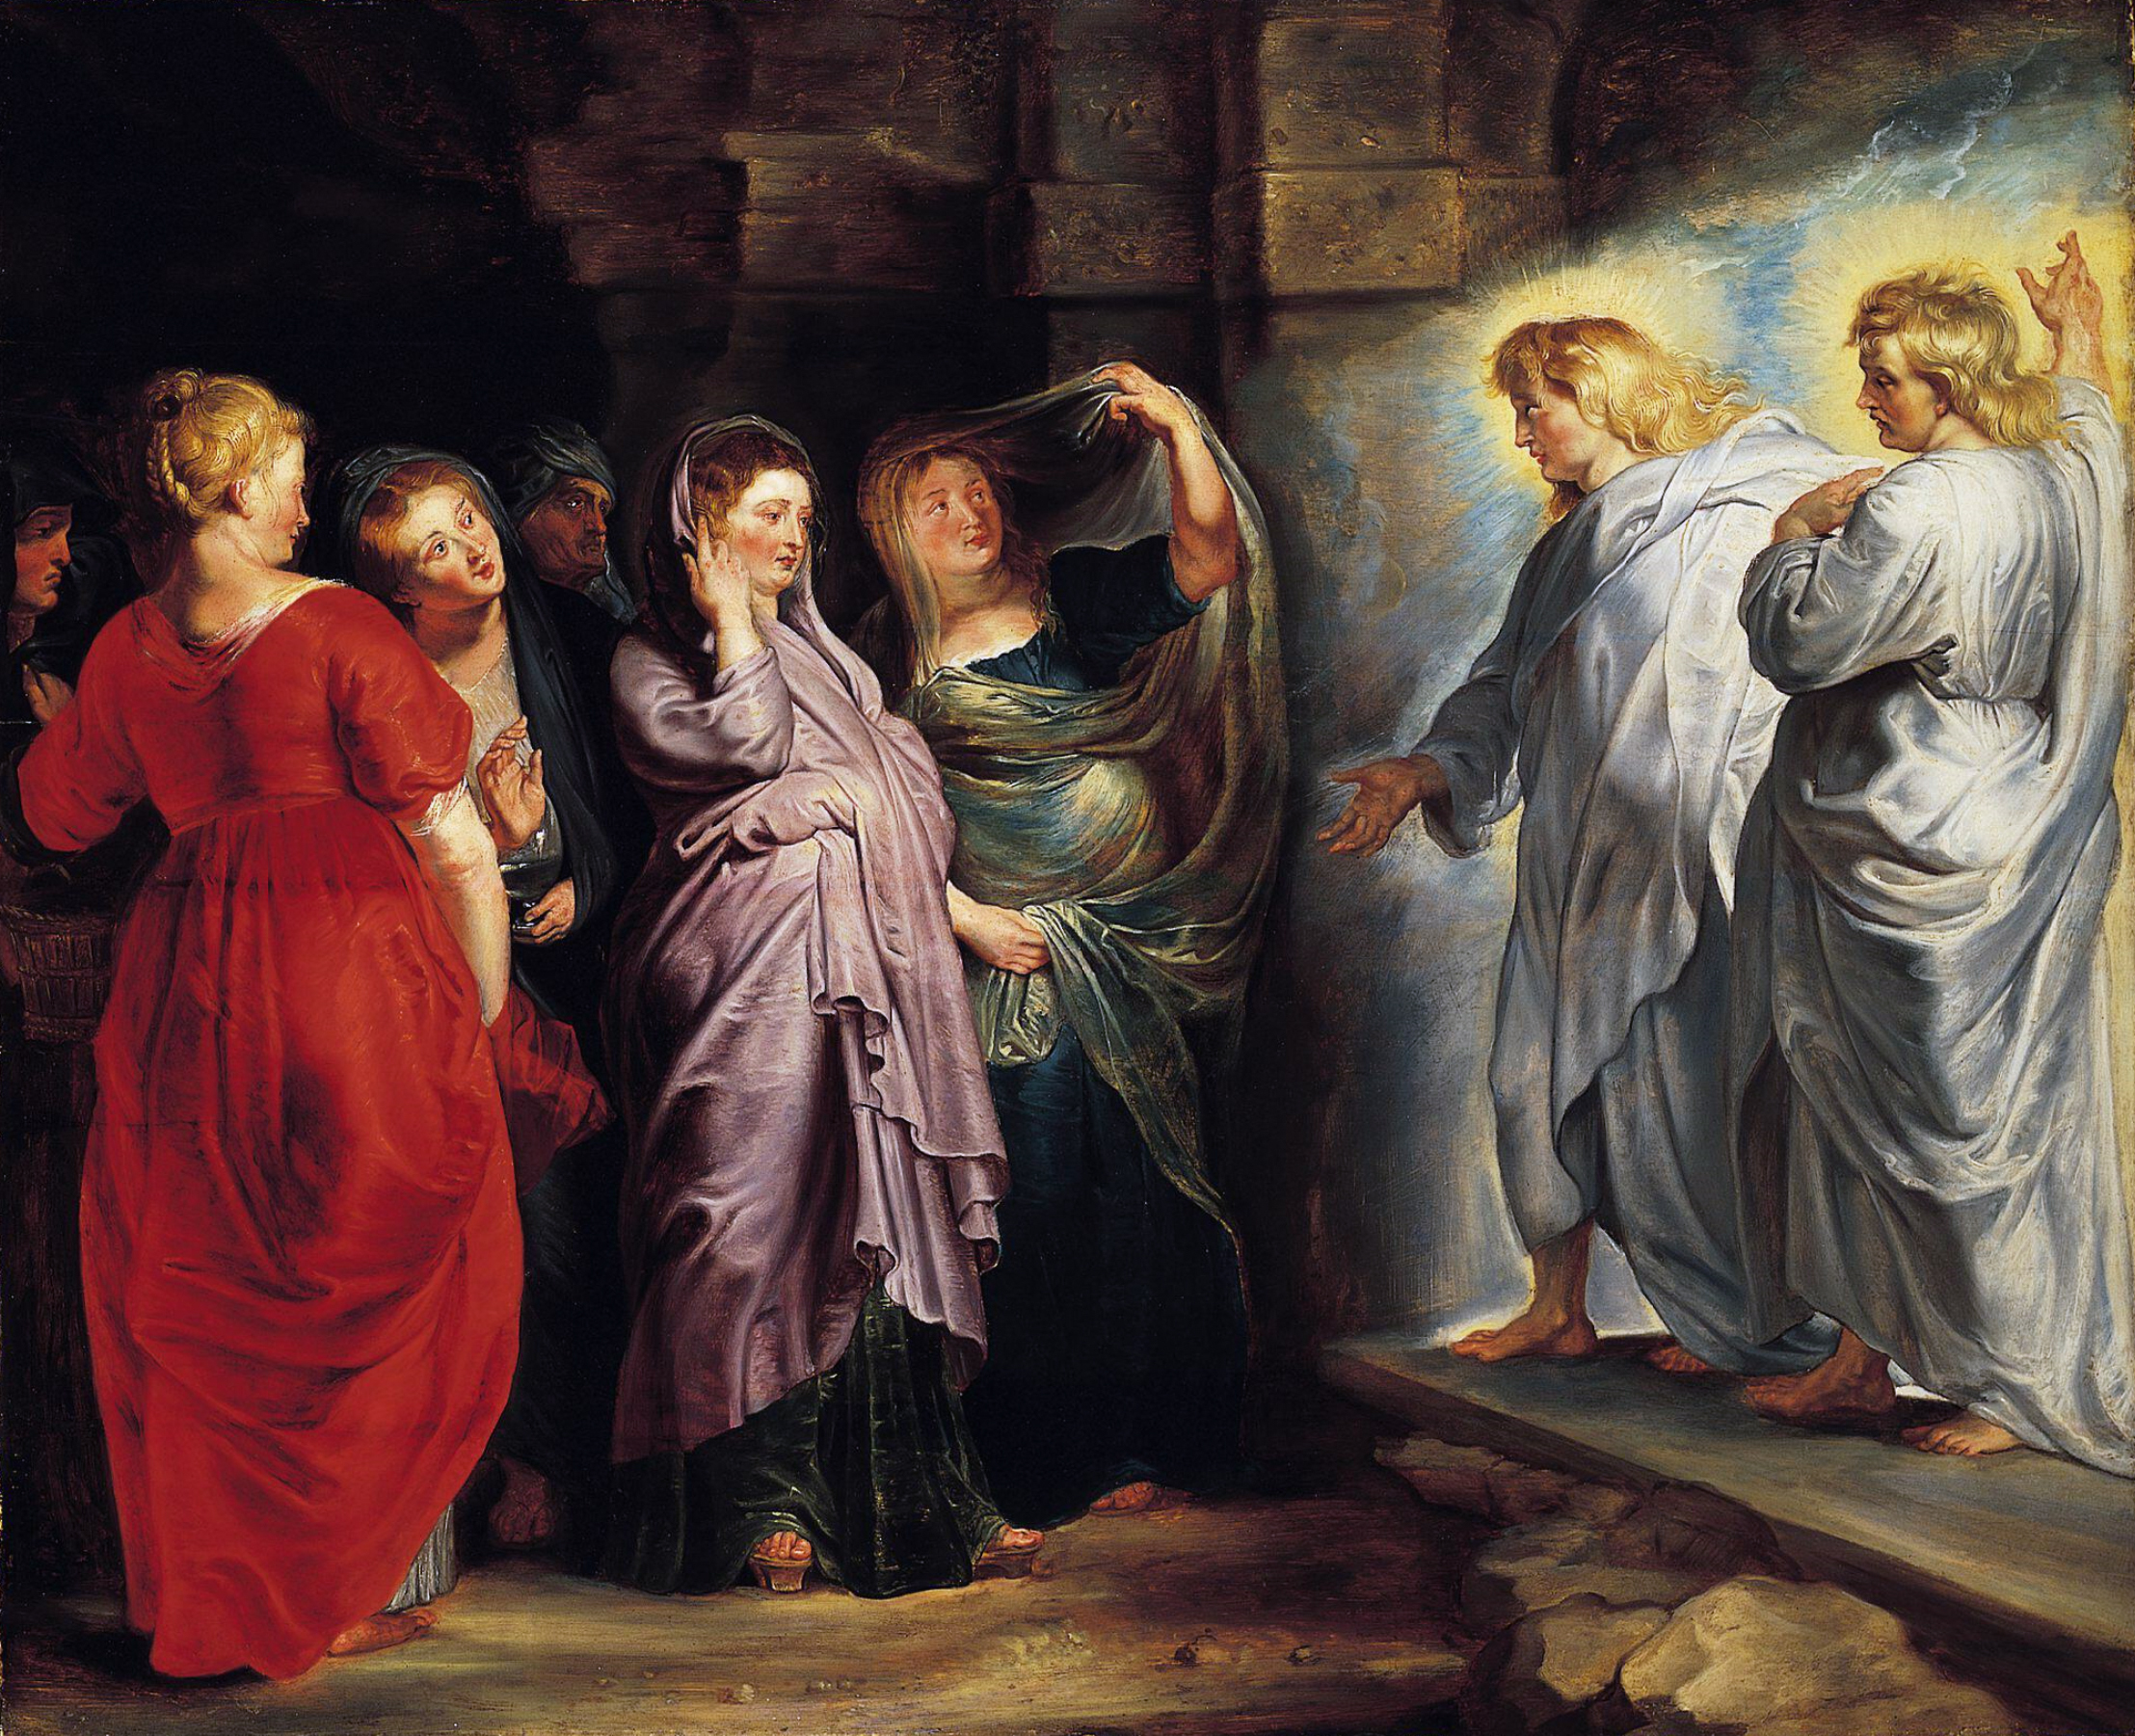 Mary Magdalene and the Women Disciples in the Gospel of Luke